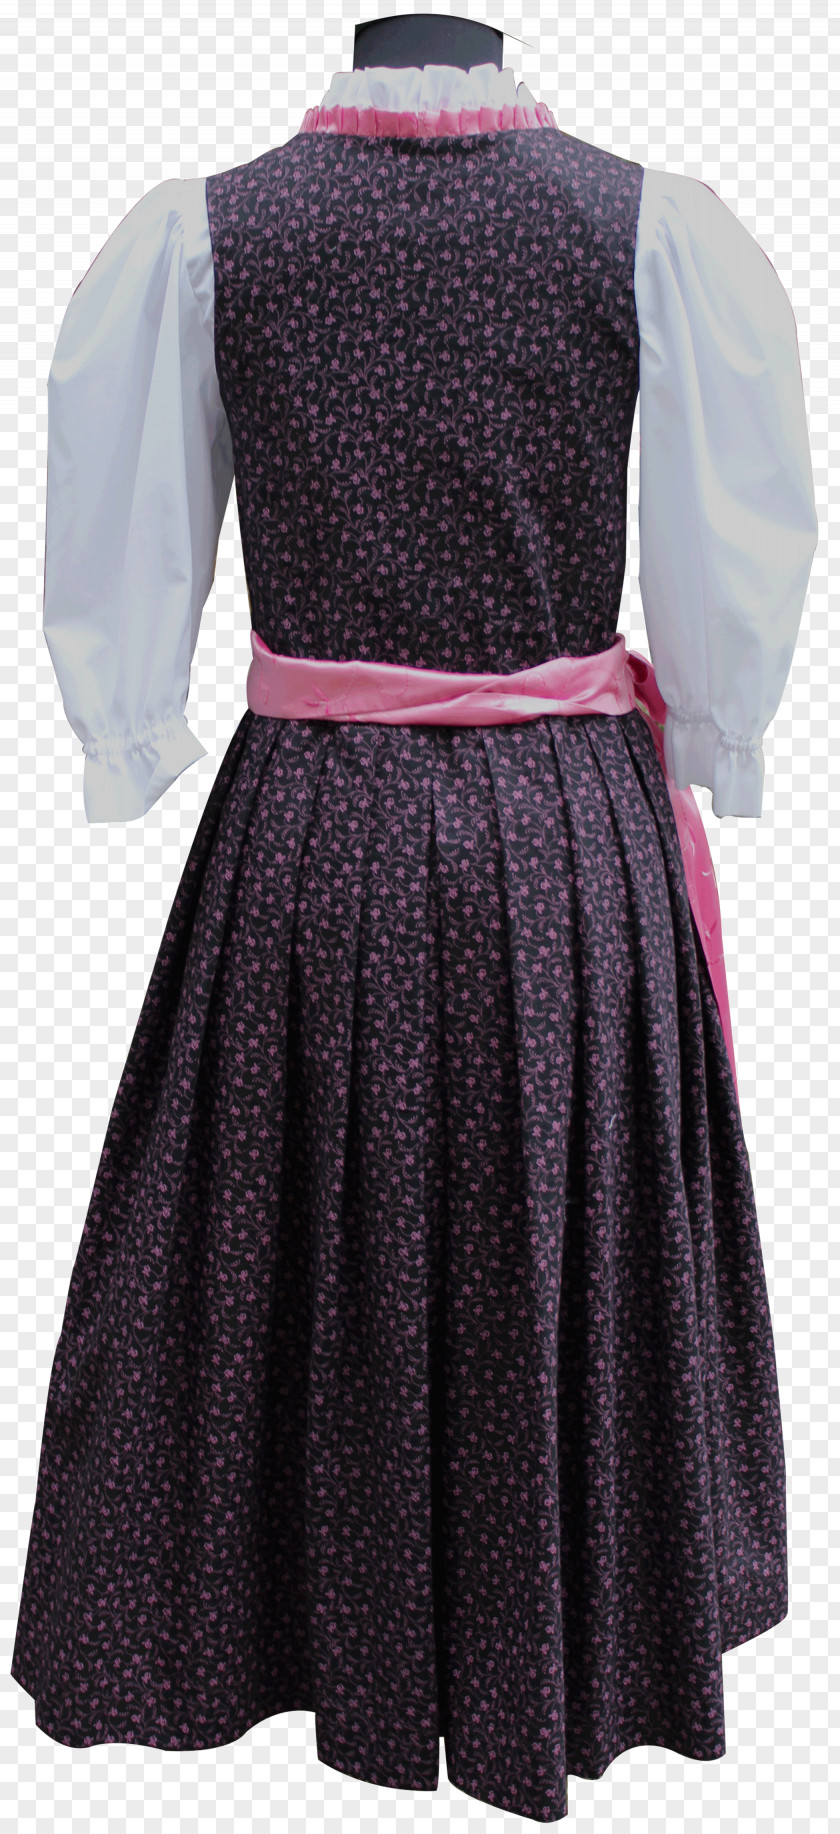 Dress Polka Dot Dirndl Skirt Apron PNG